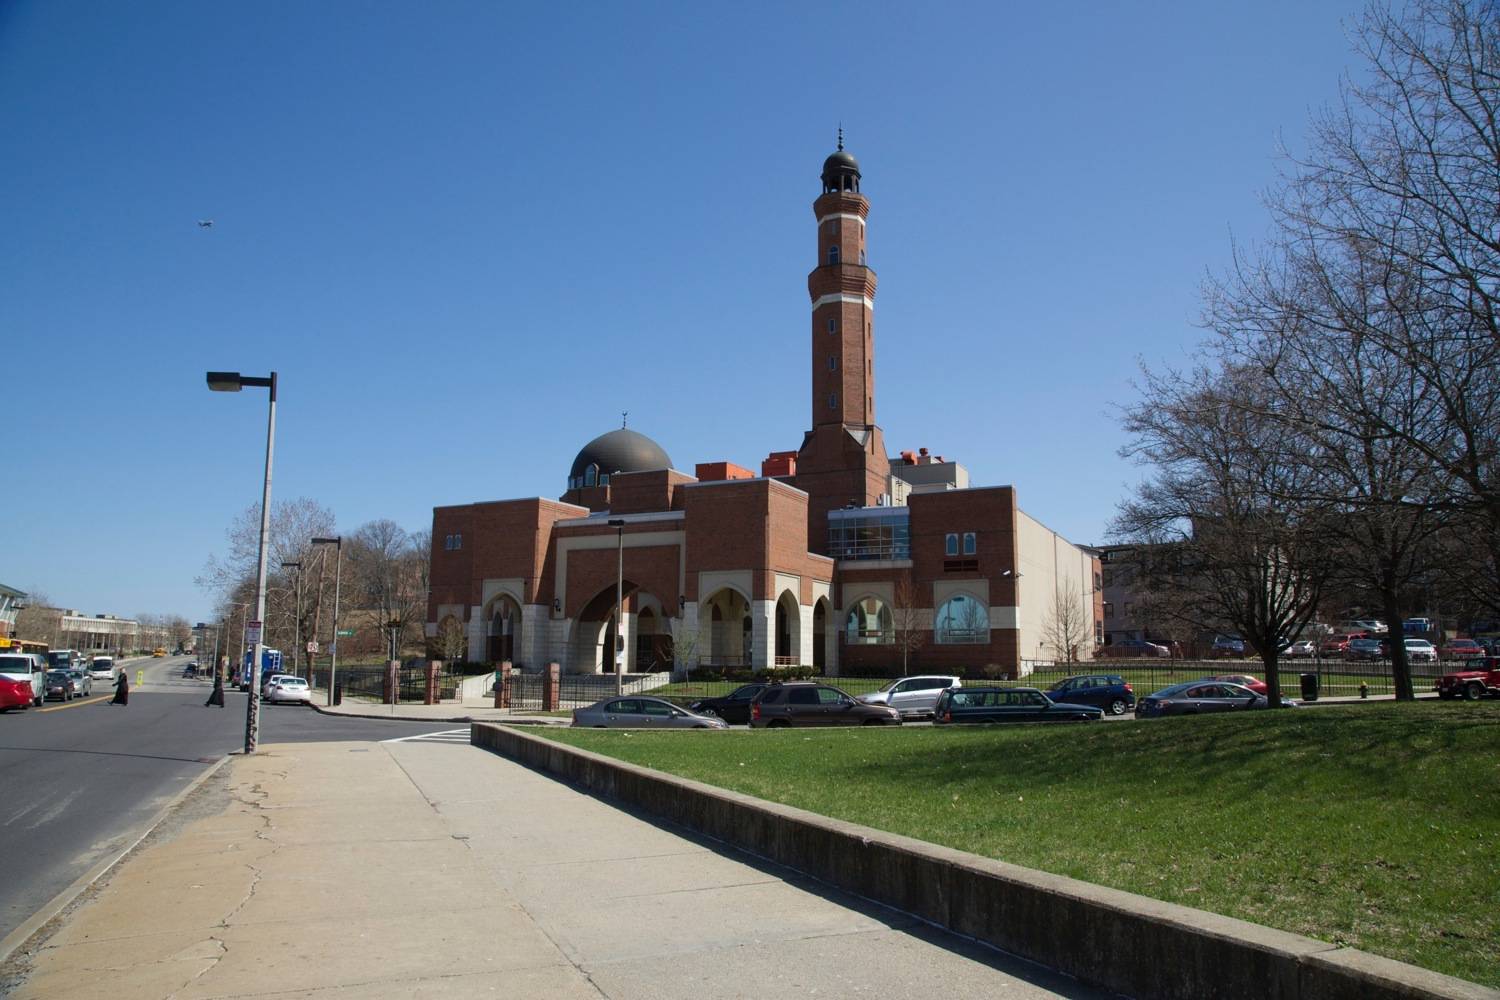 Islamic Society of Boston Cultural Center